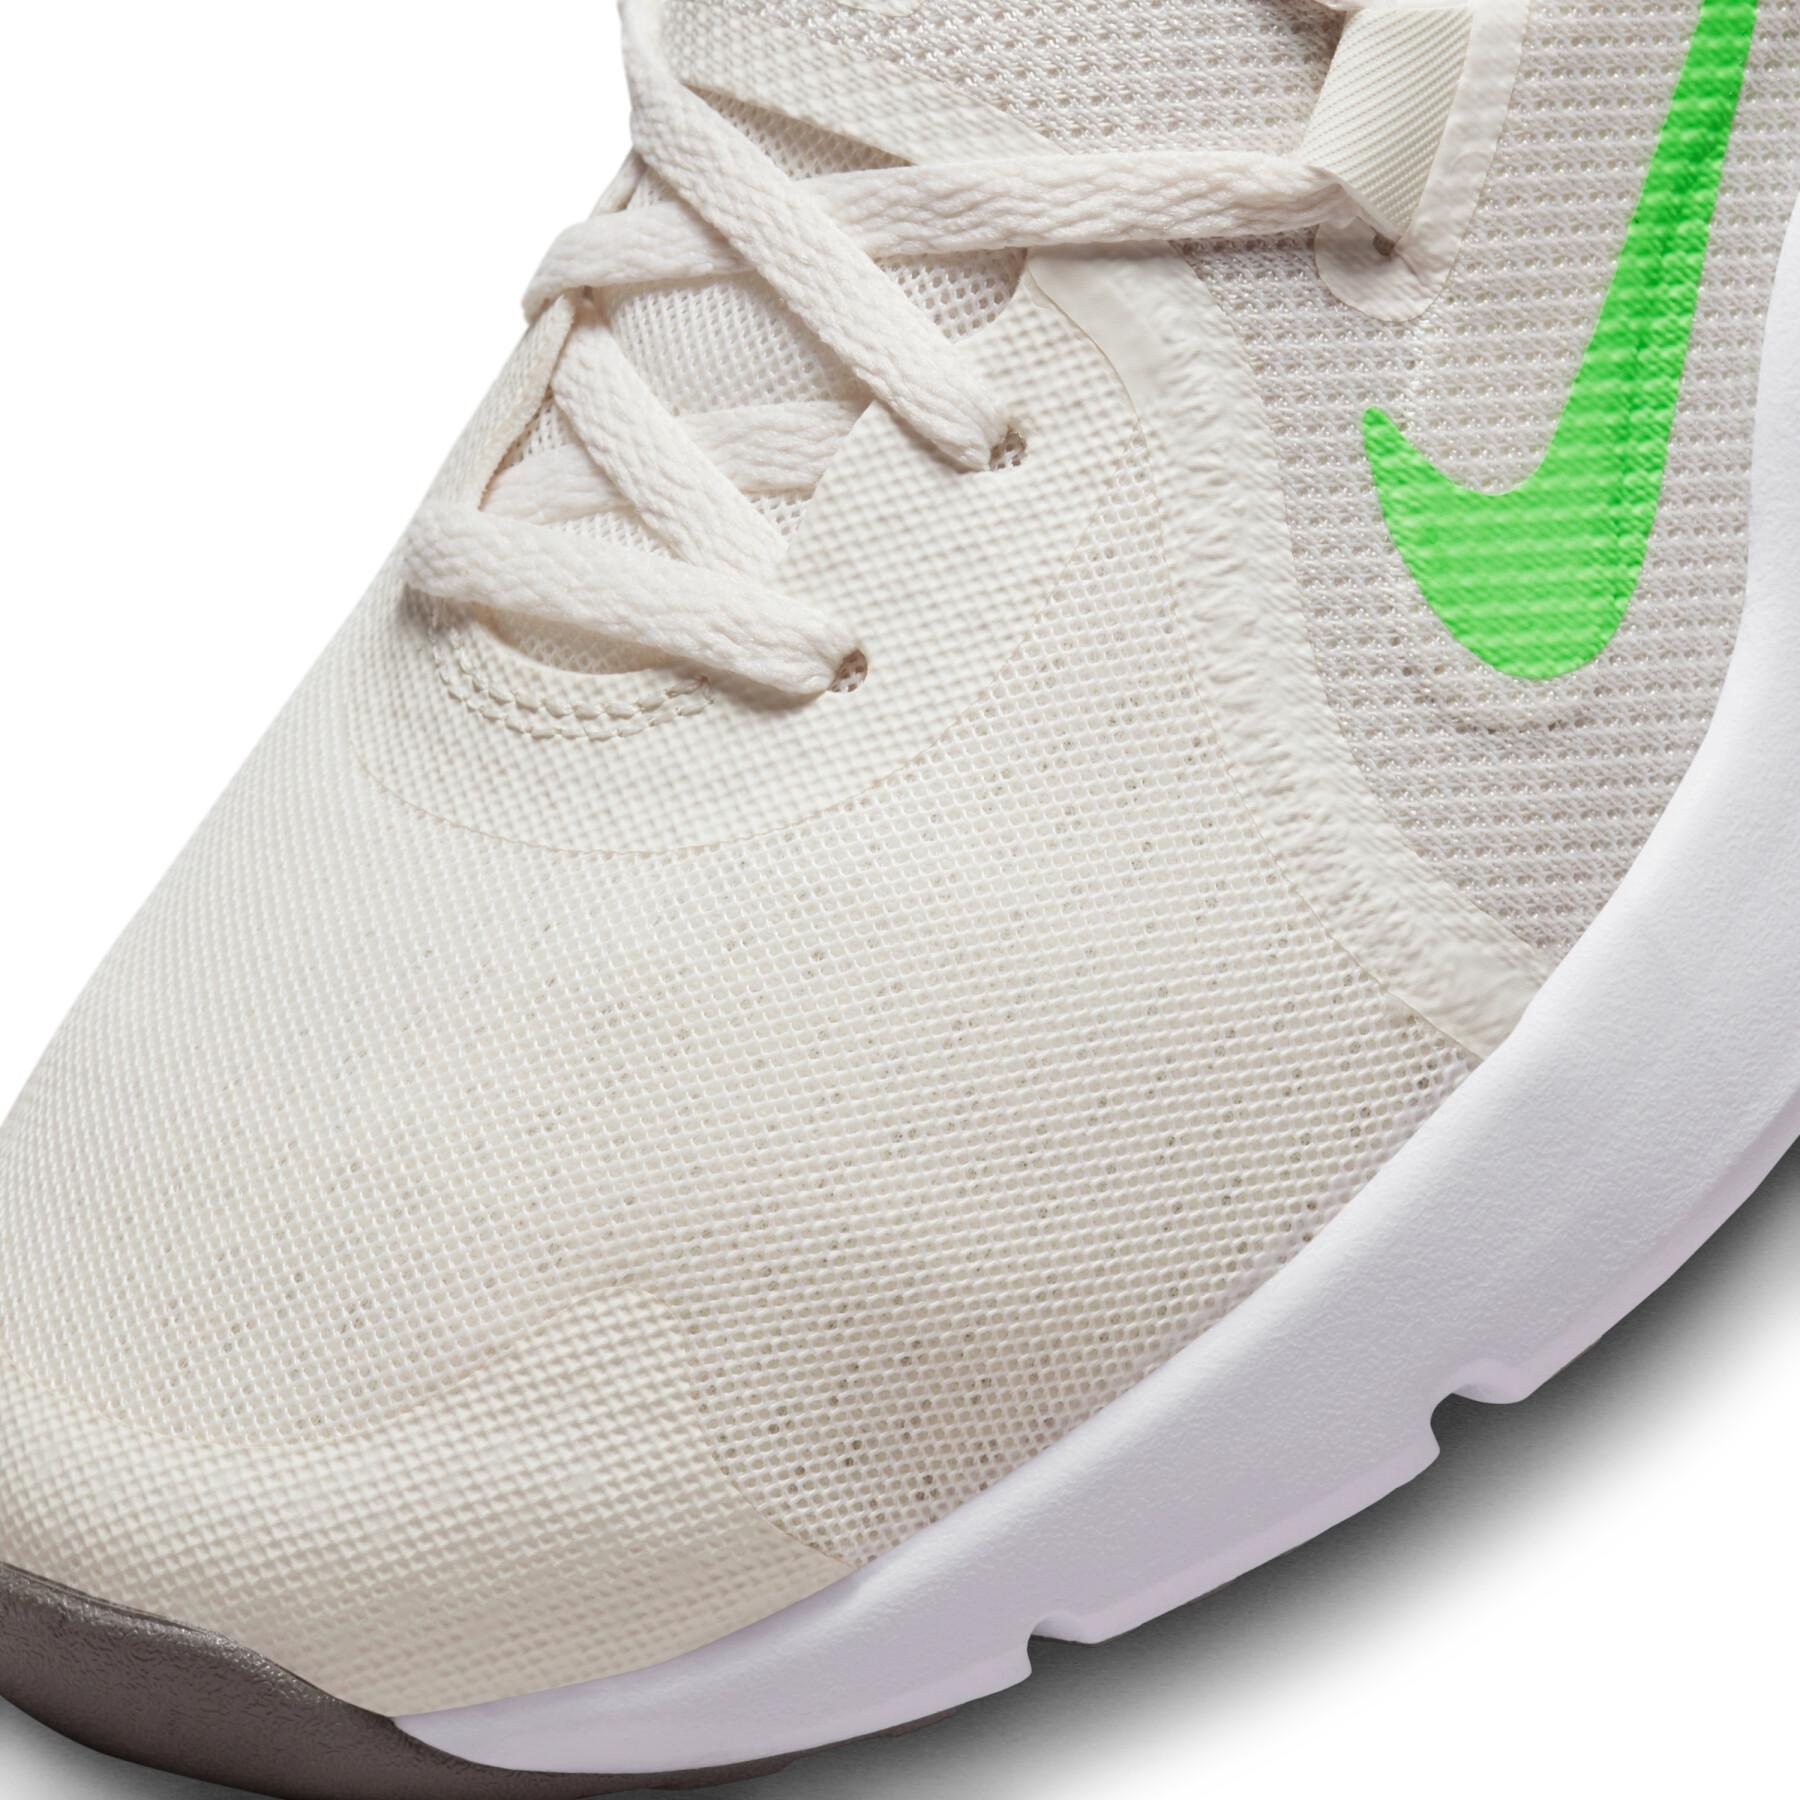 Chaussures de cross training Nike TR 13